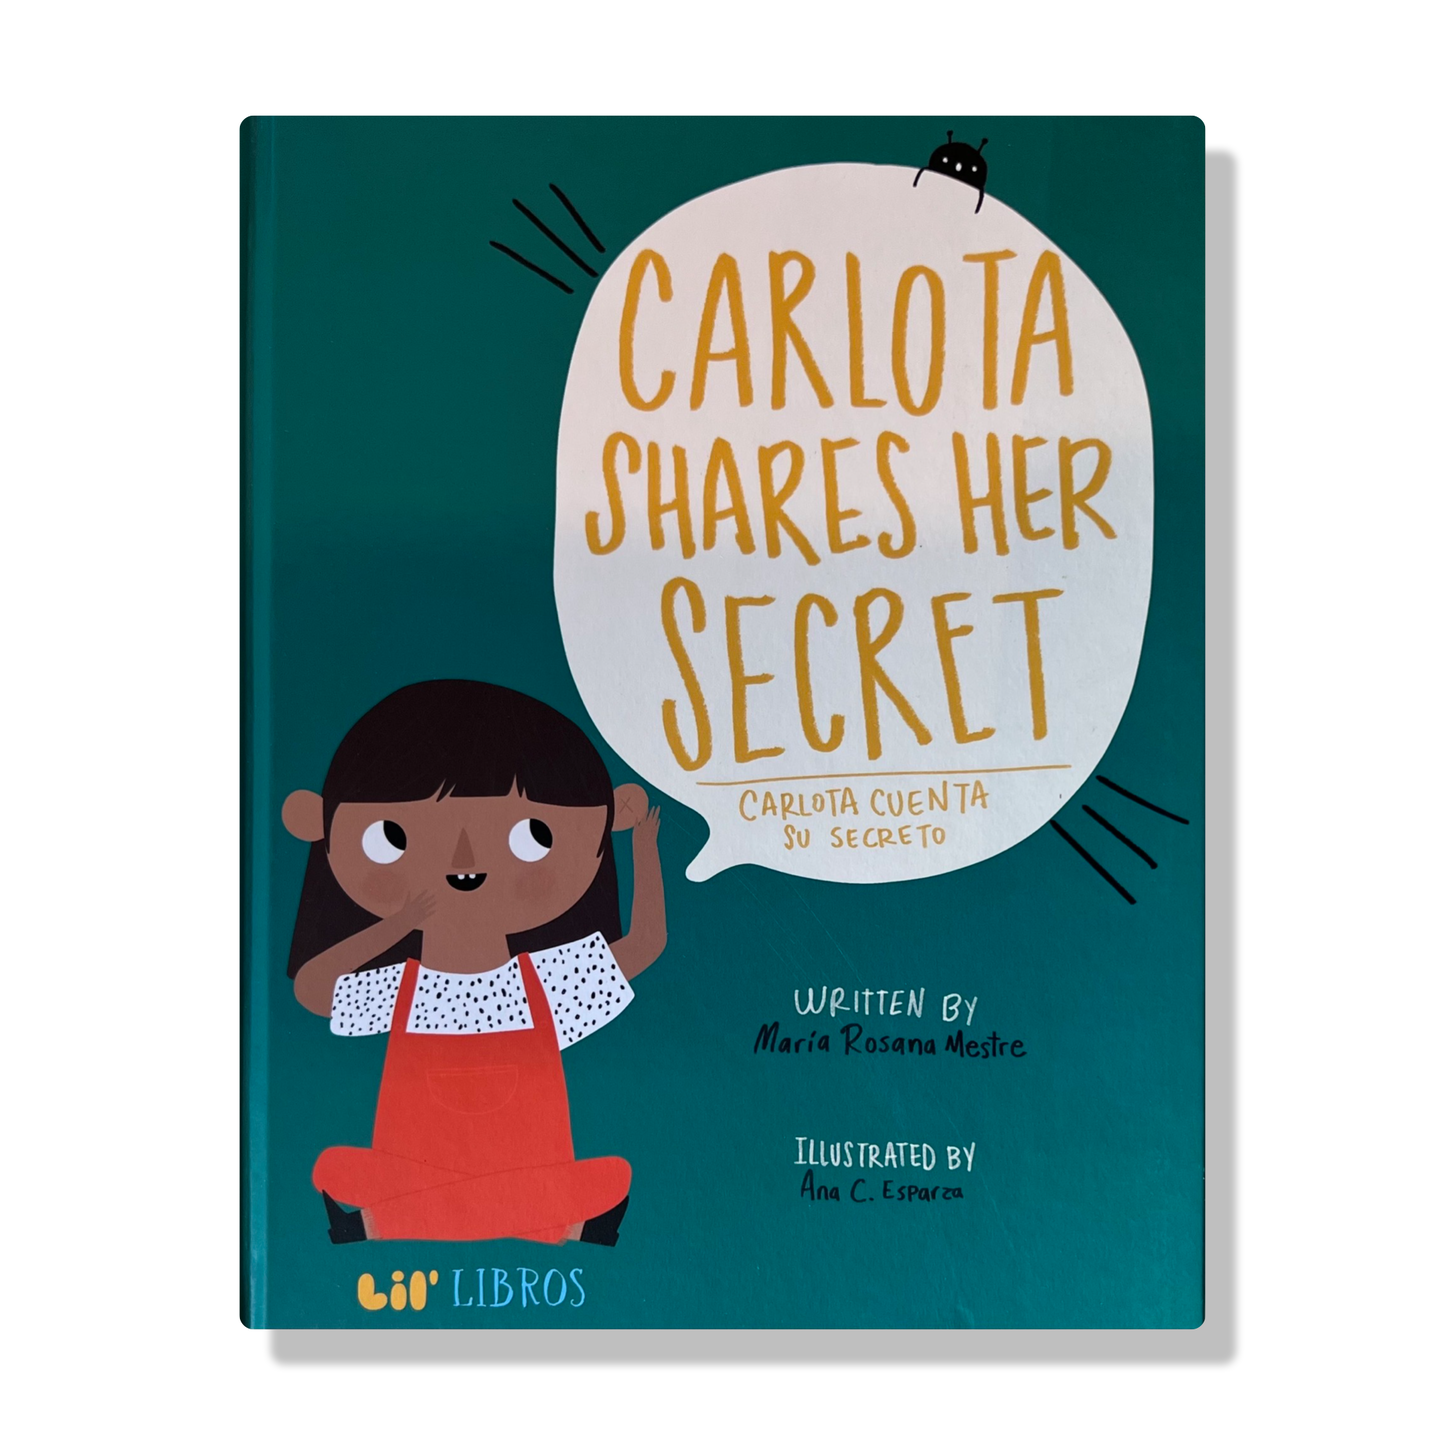 Carlota Shares Her Secret: Carlota cuenta su secreto